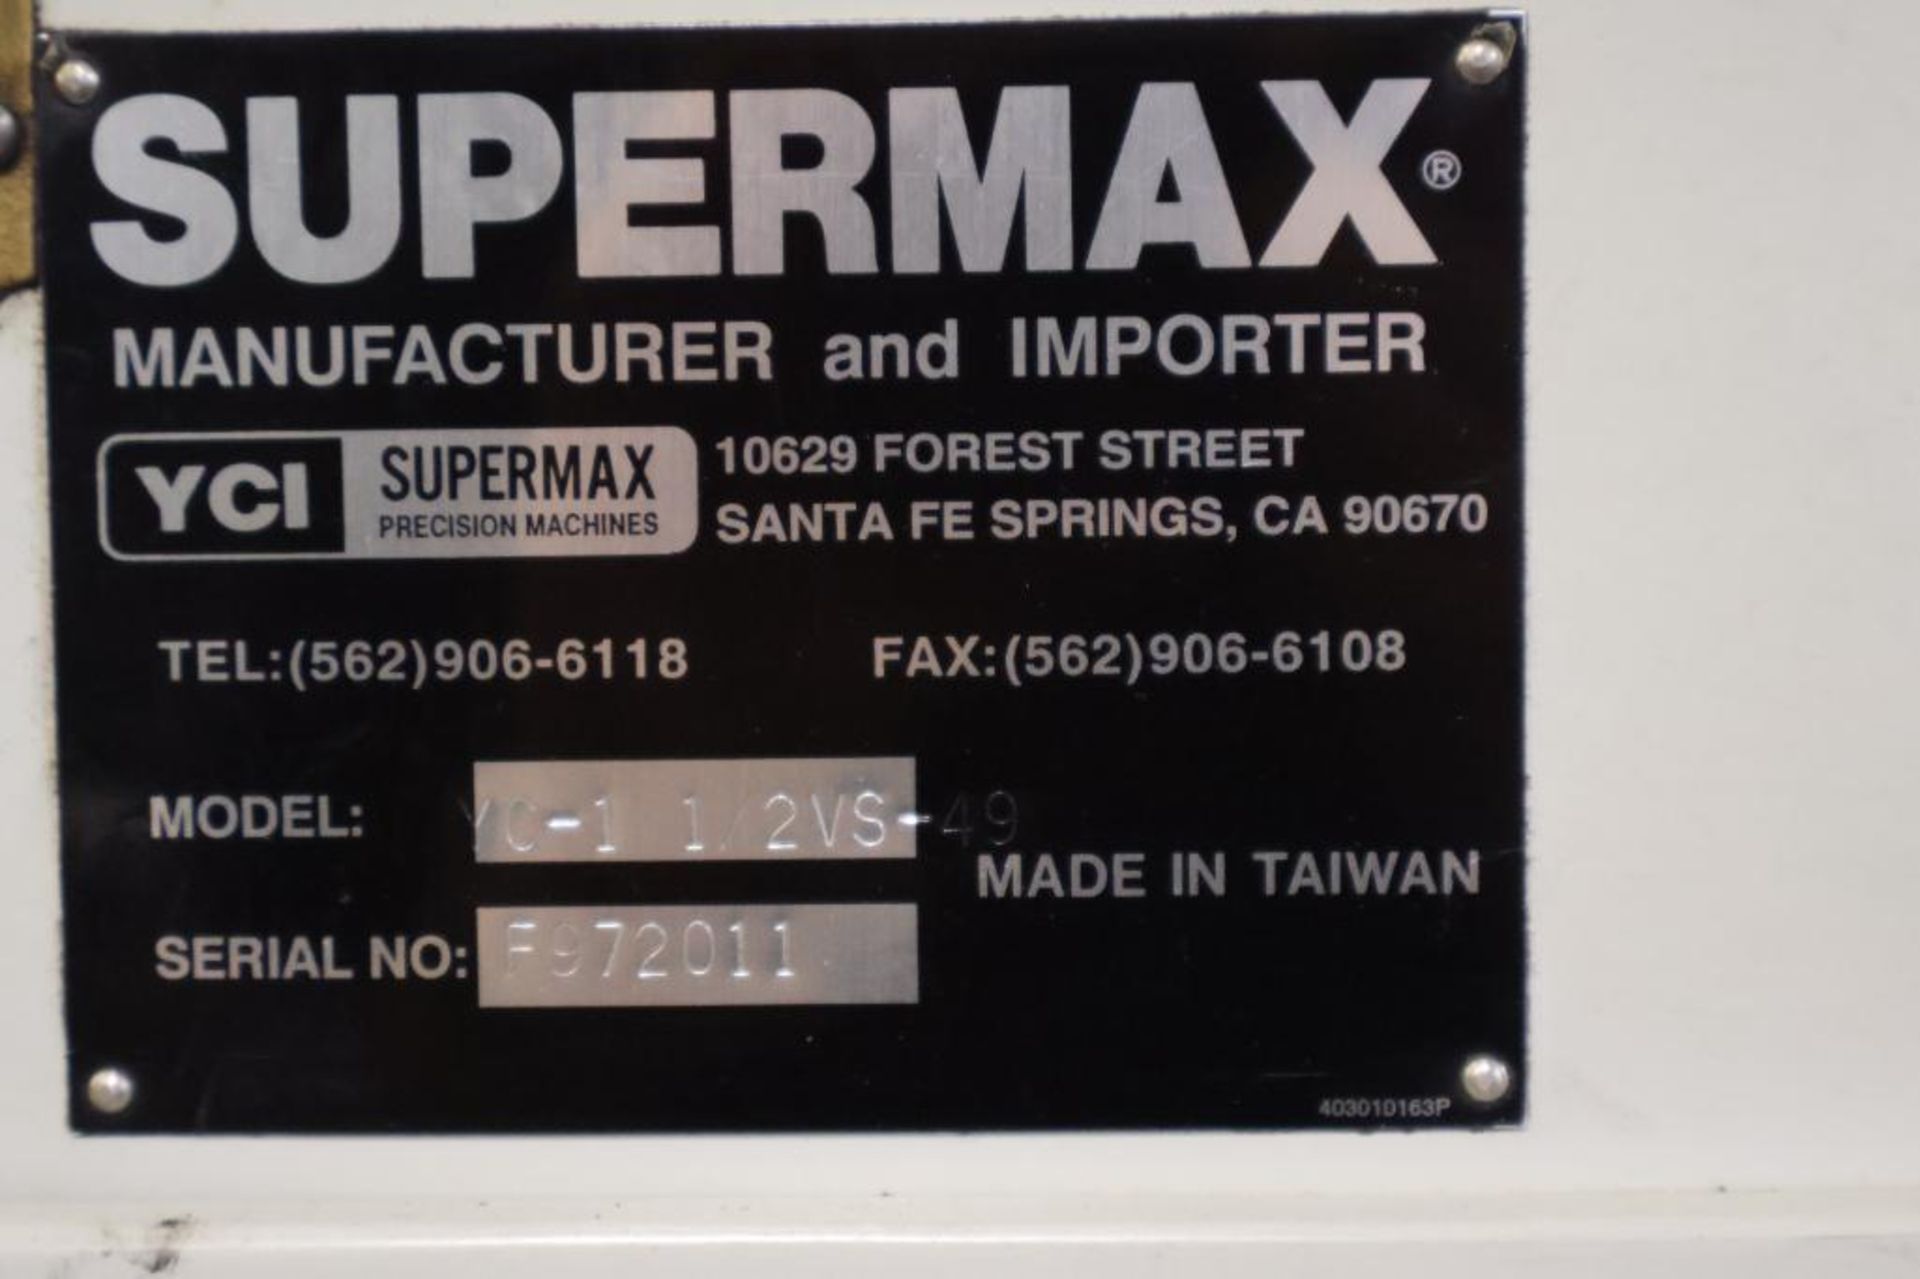 Supermax YC-1-1/2 VS vertical milling machine - Image 17 of 17